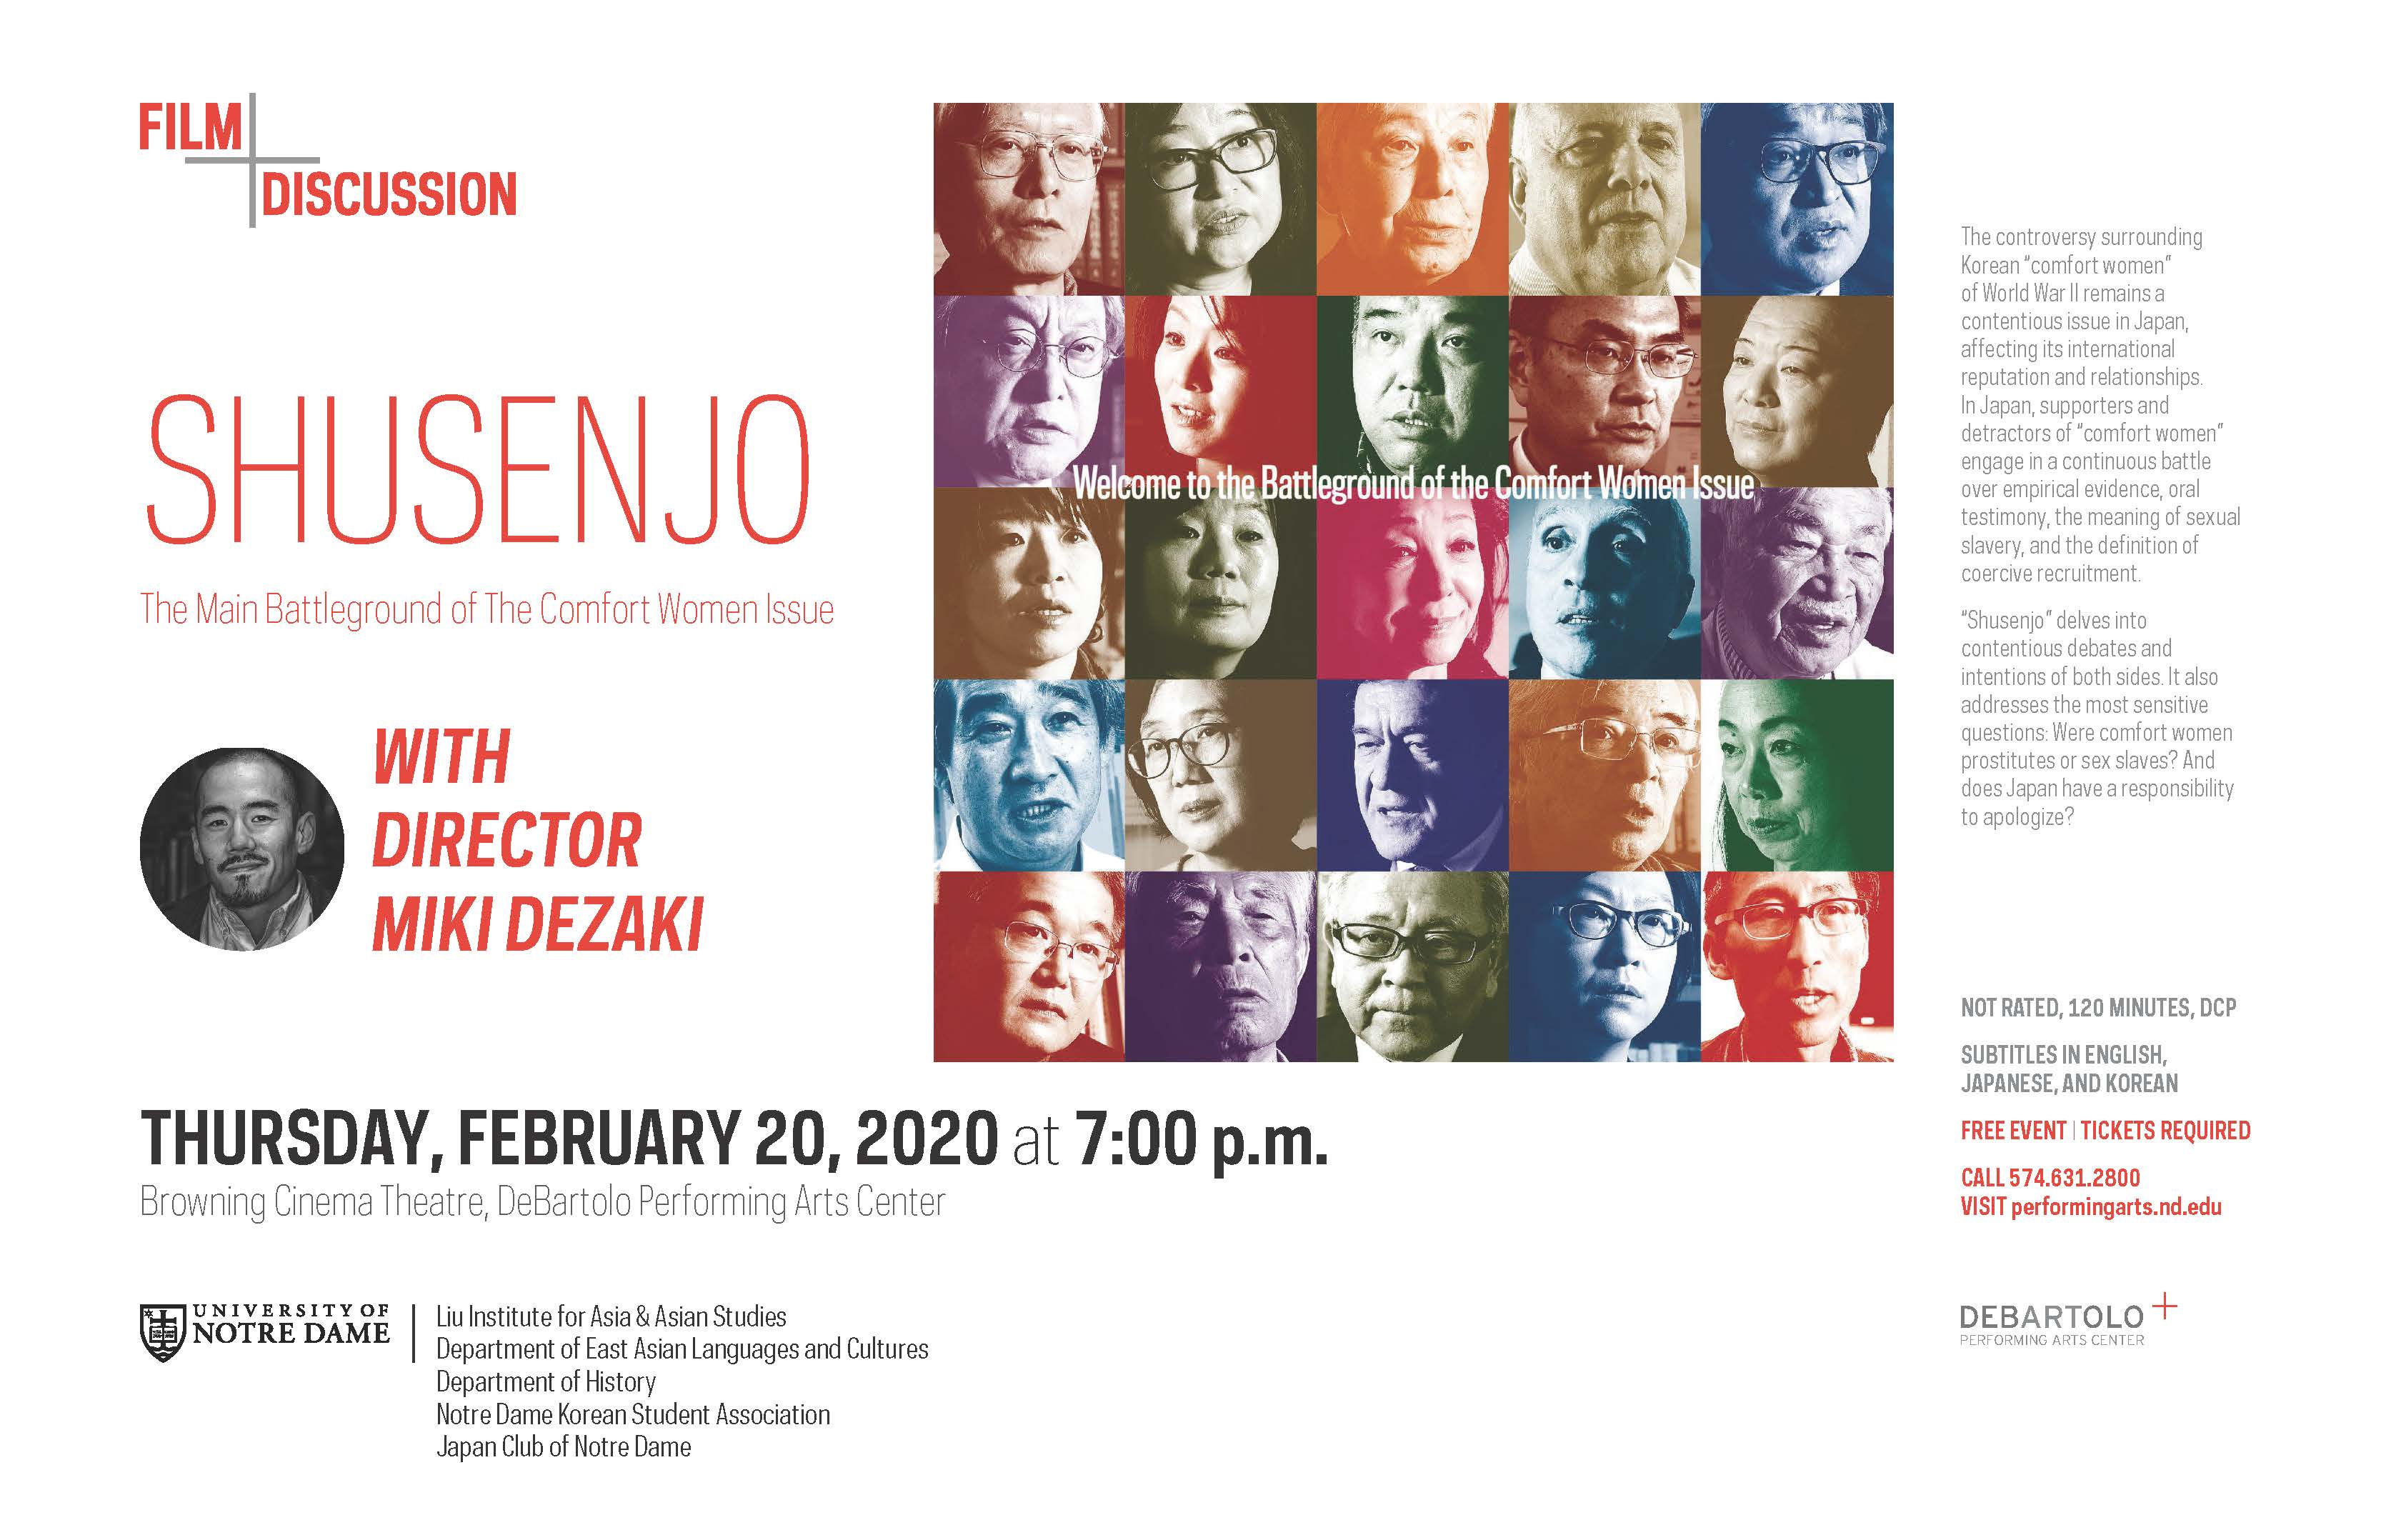 Film Screening Shusenjo The Main Battleground of the Comfort Women Issue (2019) Events Department of History University of Notre Dame image